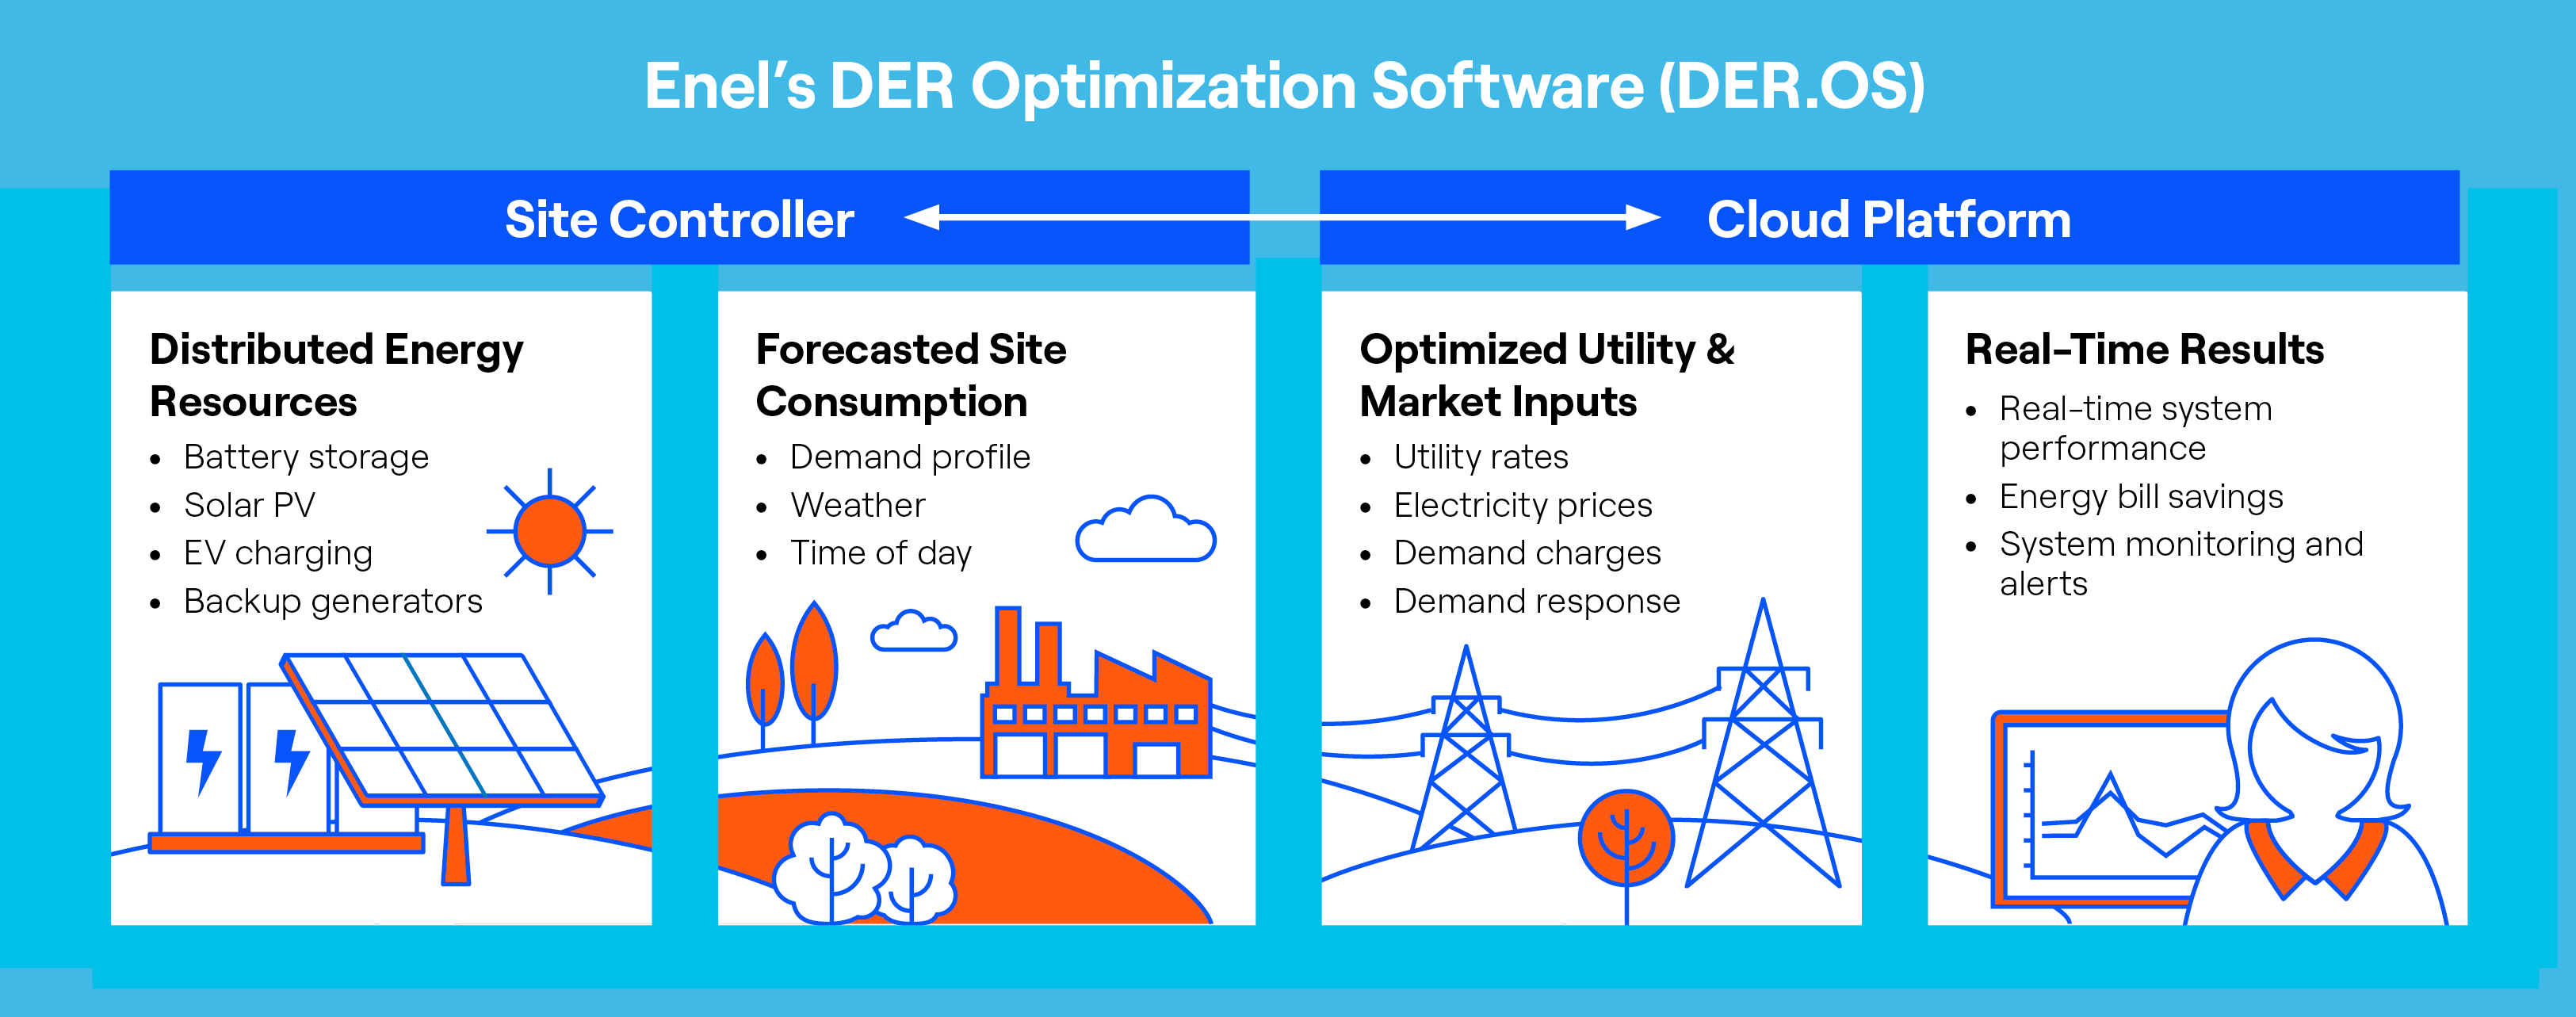 Infographic showing Enel's DER Optimization Software